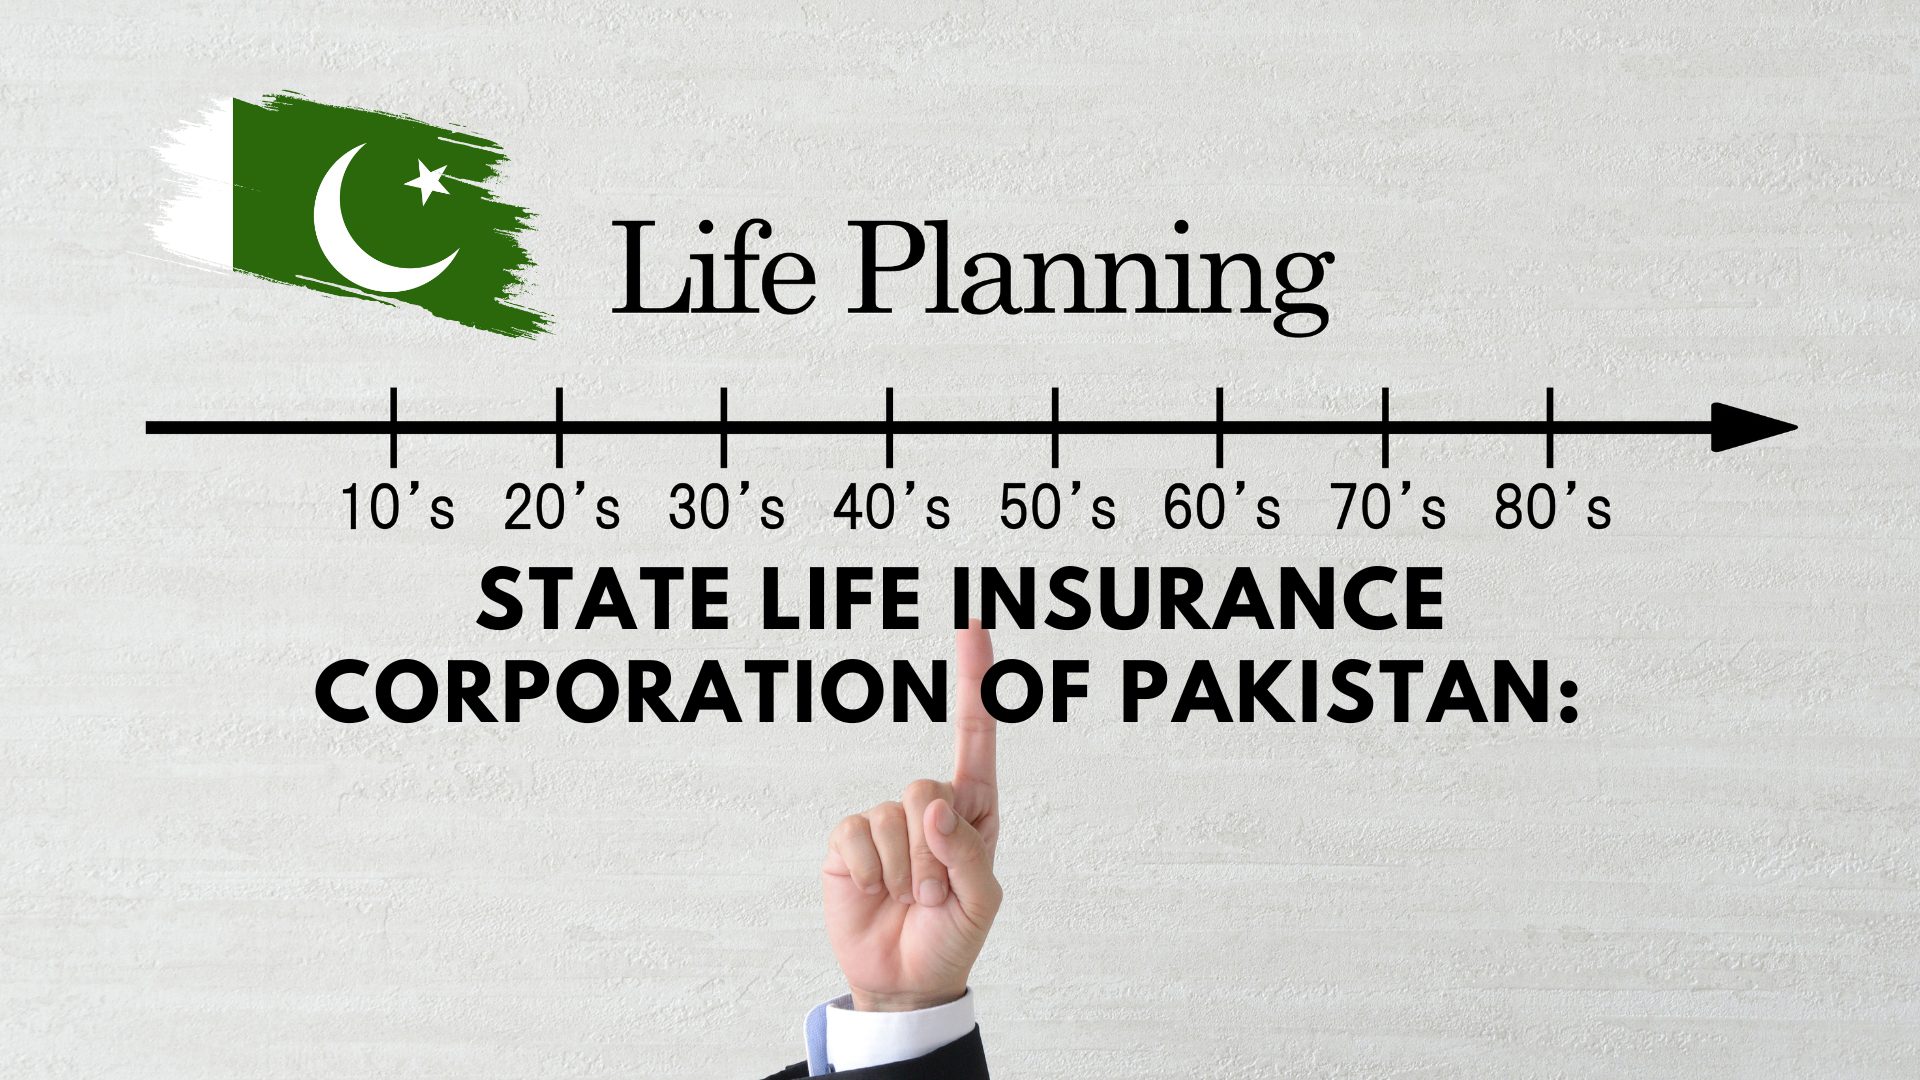 State Life Insurance Corporation of Pakistan: